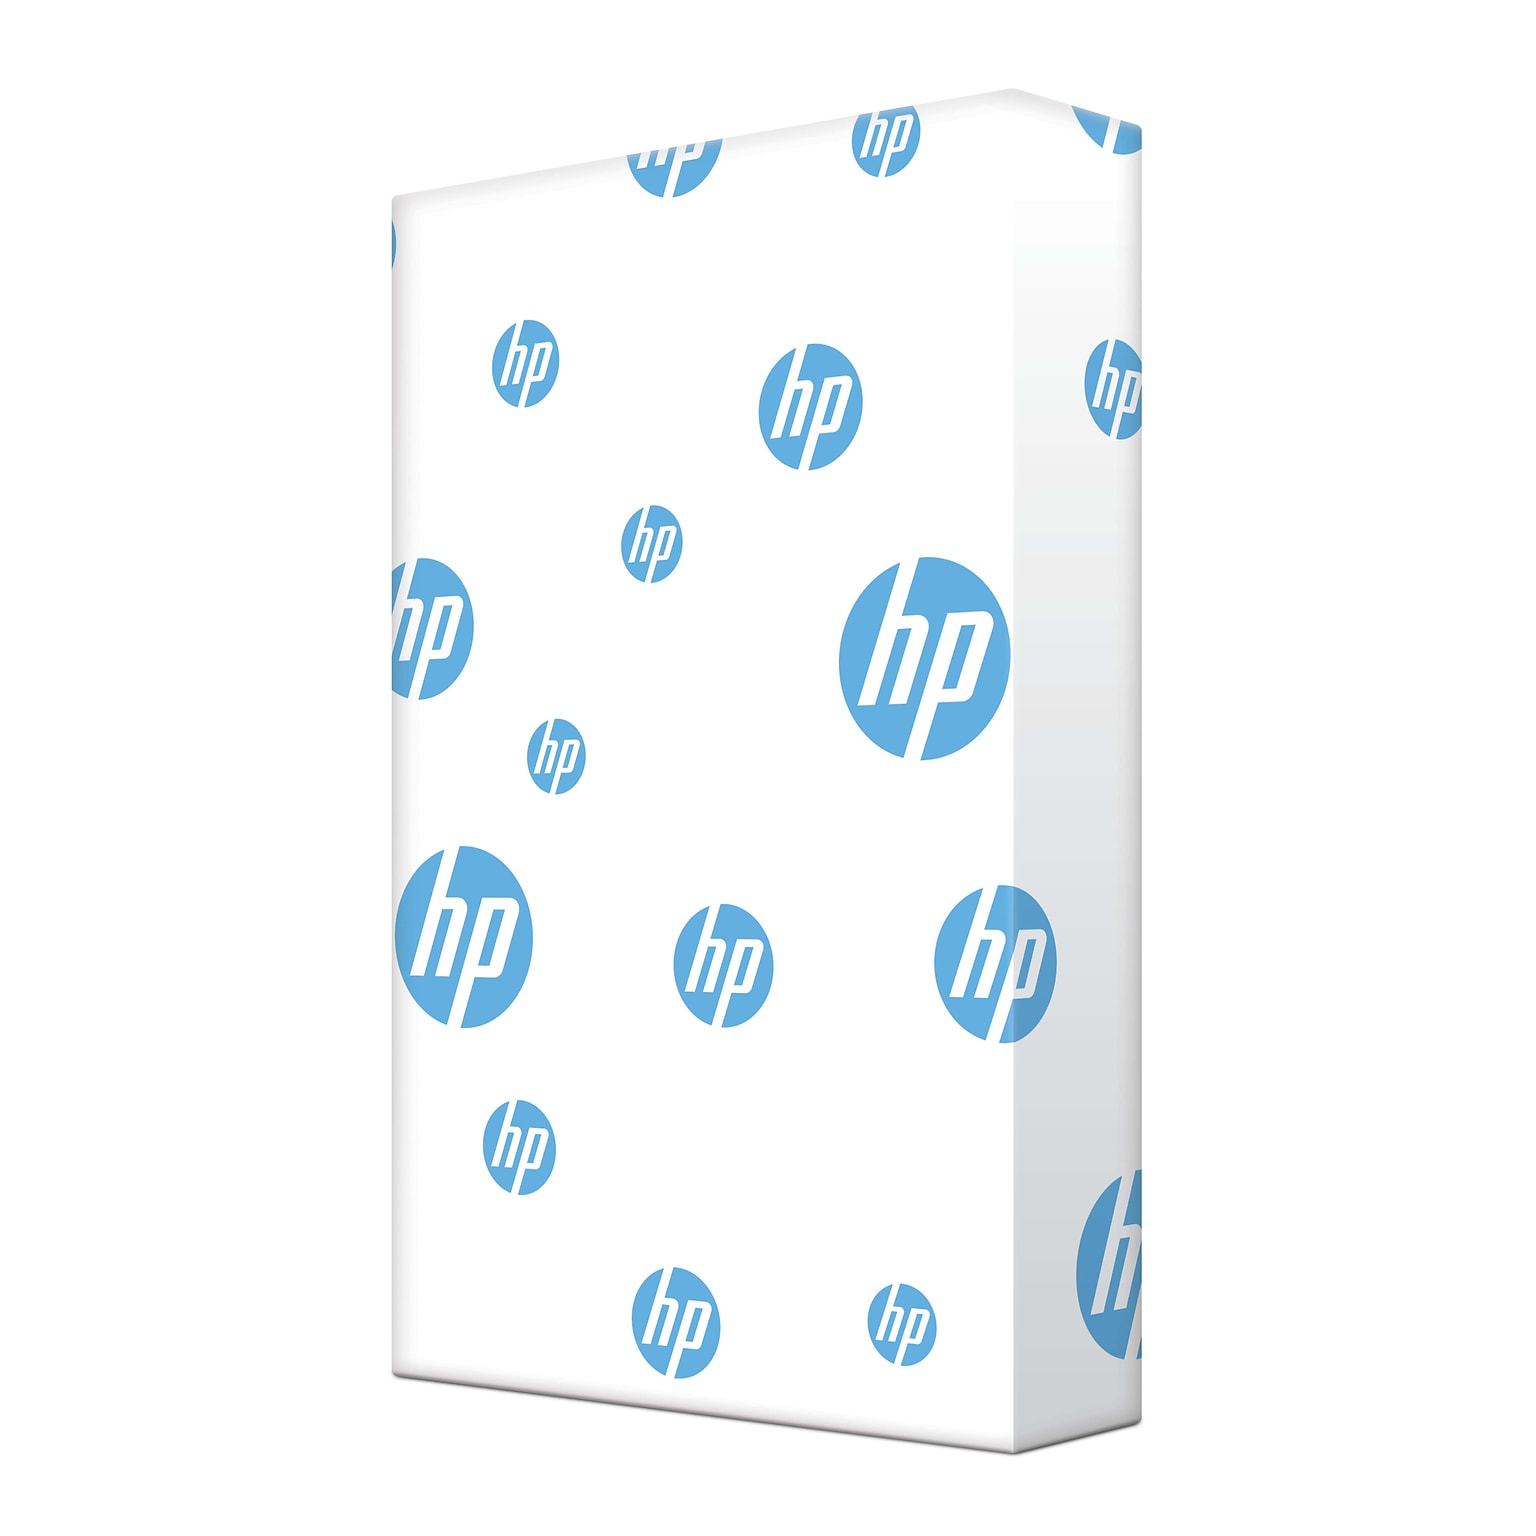 HP Office20 8.5 x 14 Multipurpose Paper, 20 lbs., 92 Brightness, 500 Sheets/Ream (HPC8514)